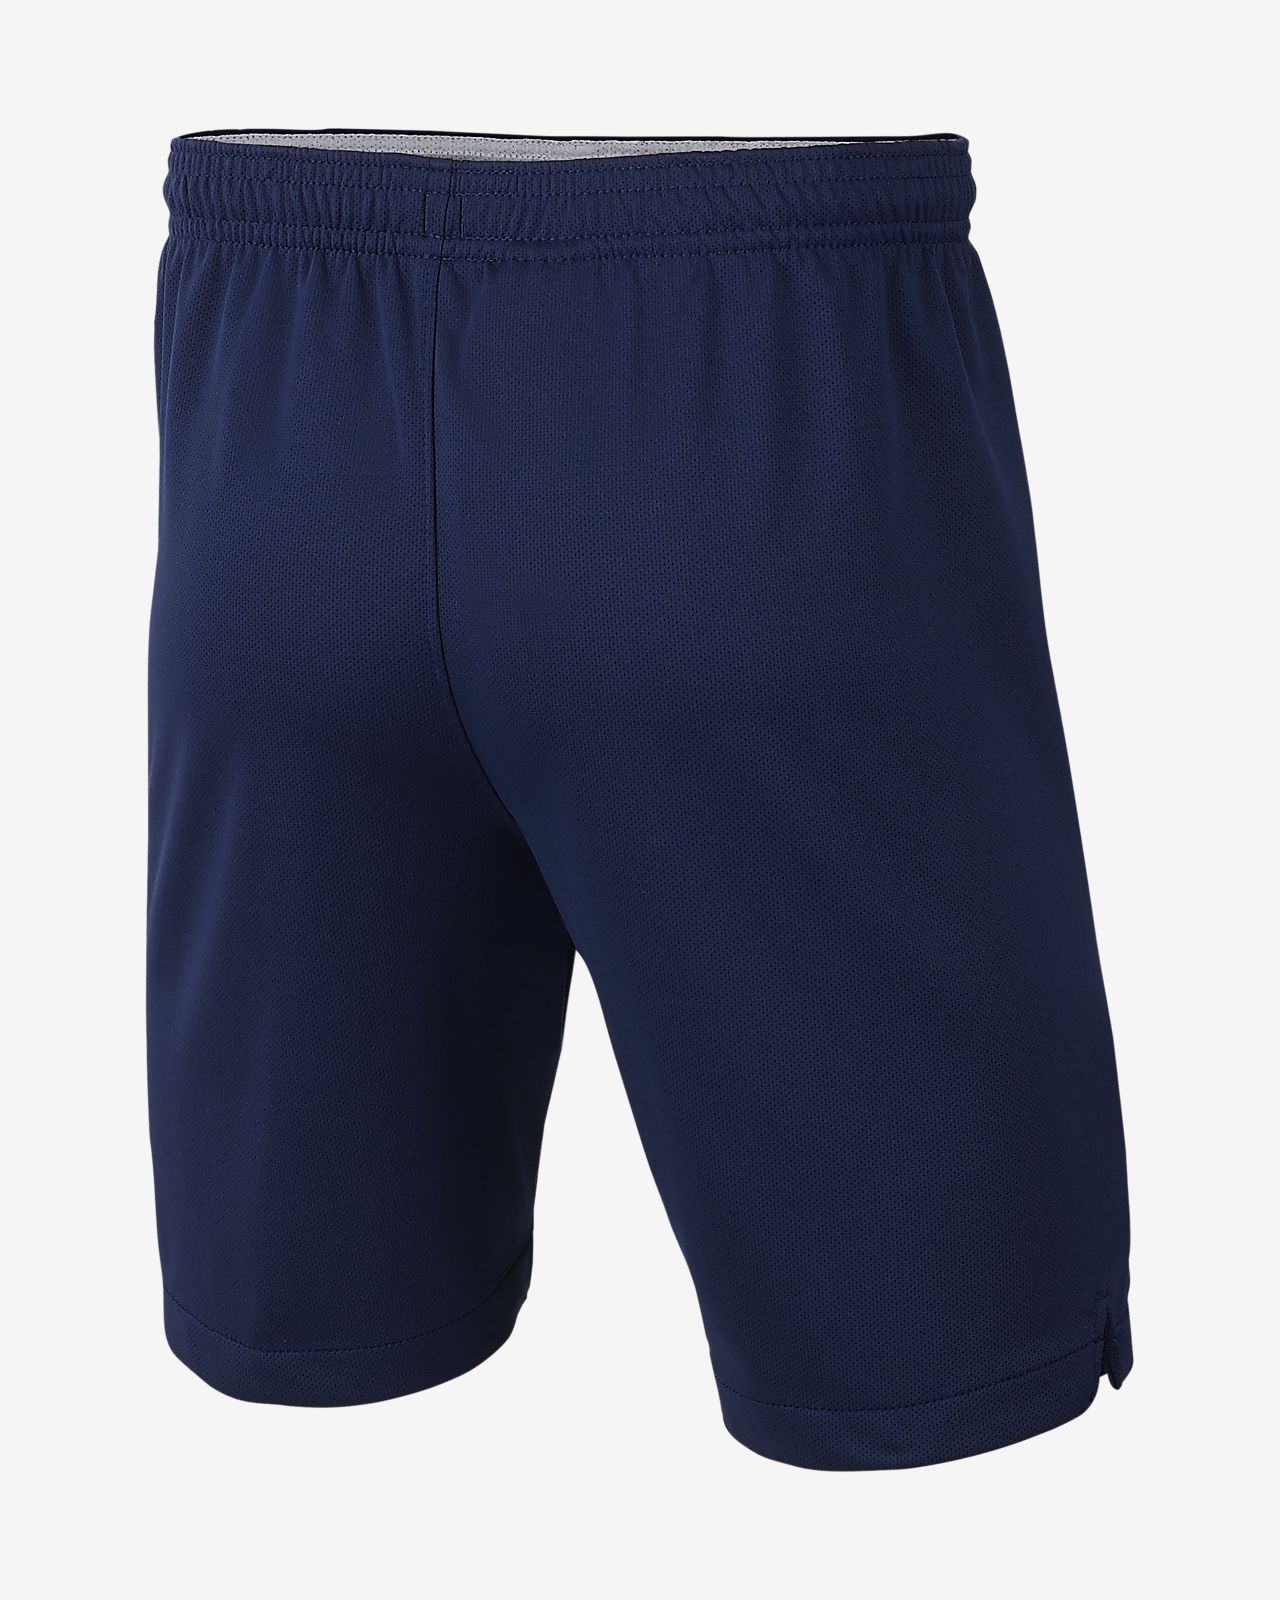 tottenham junior home shorts